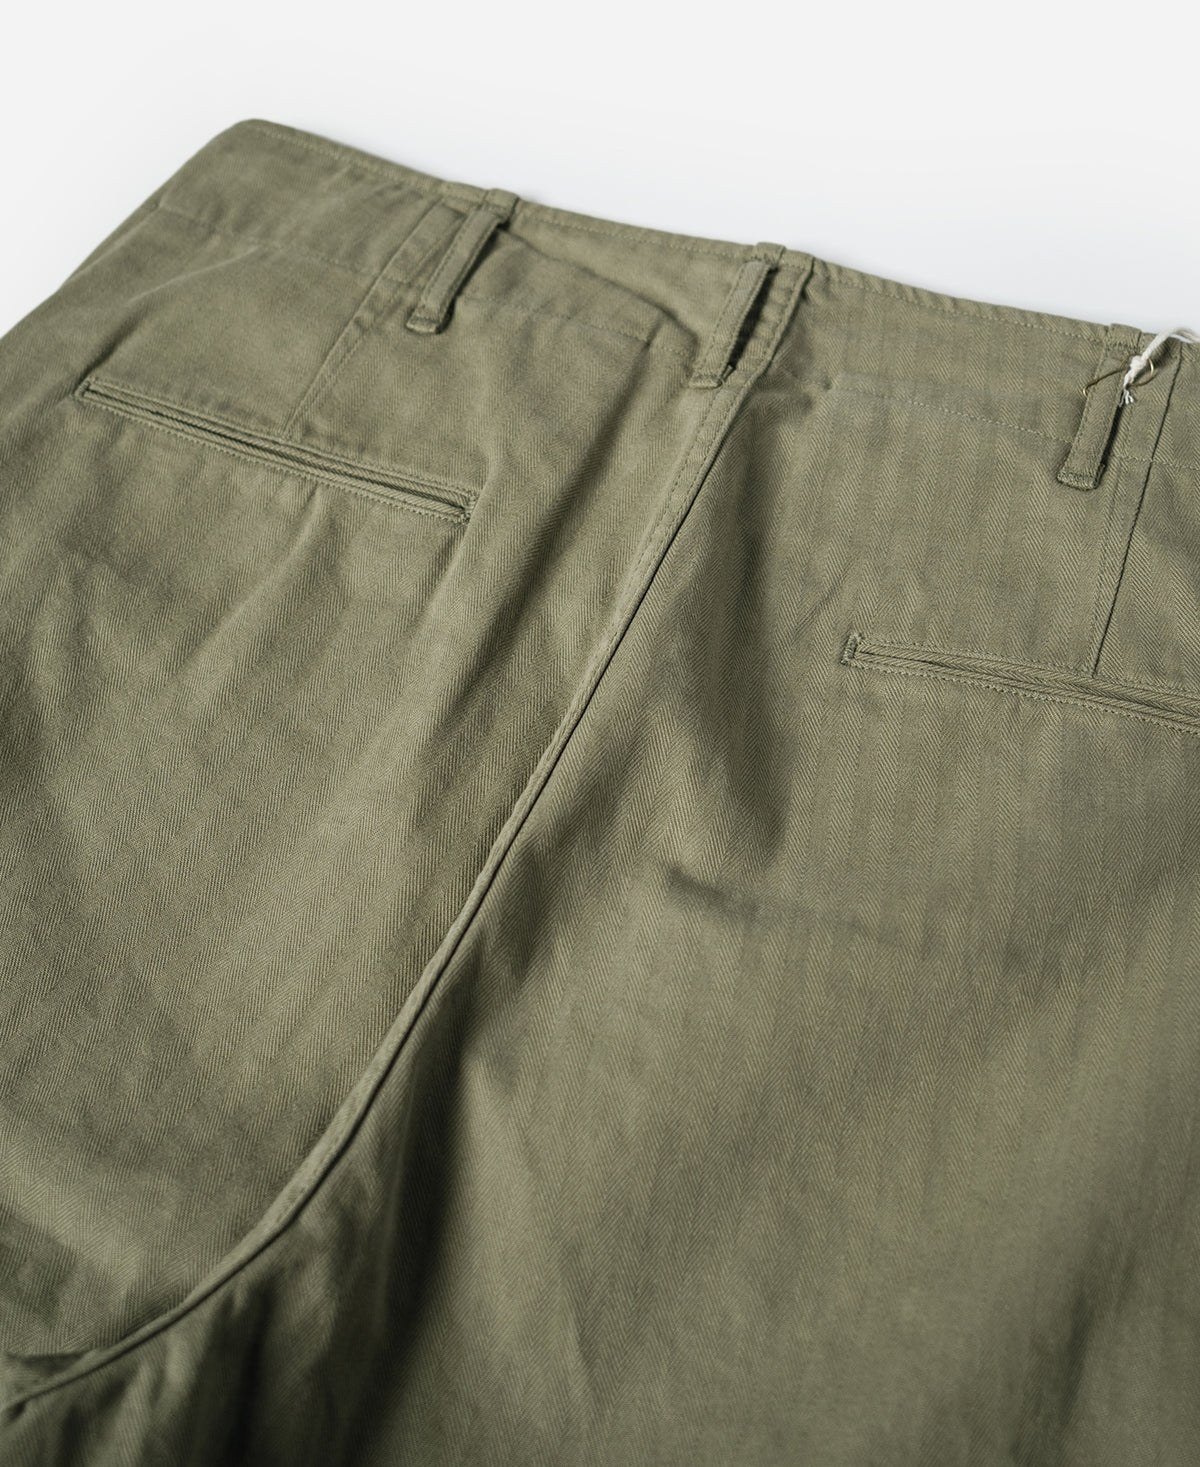 US Army M-41 HBT Fatigue Trousers | 1941 Herringbone Twill Pants